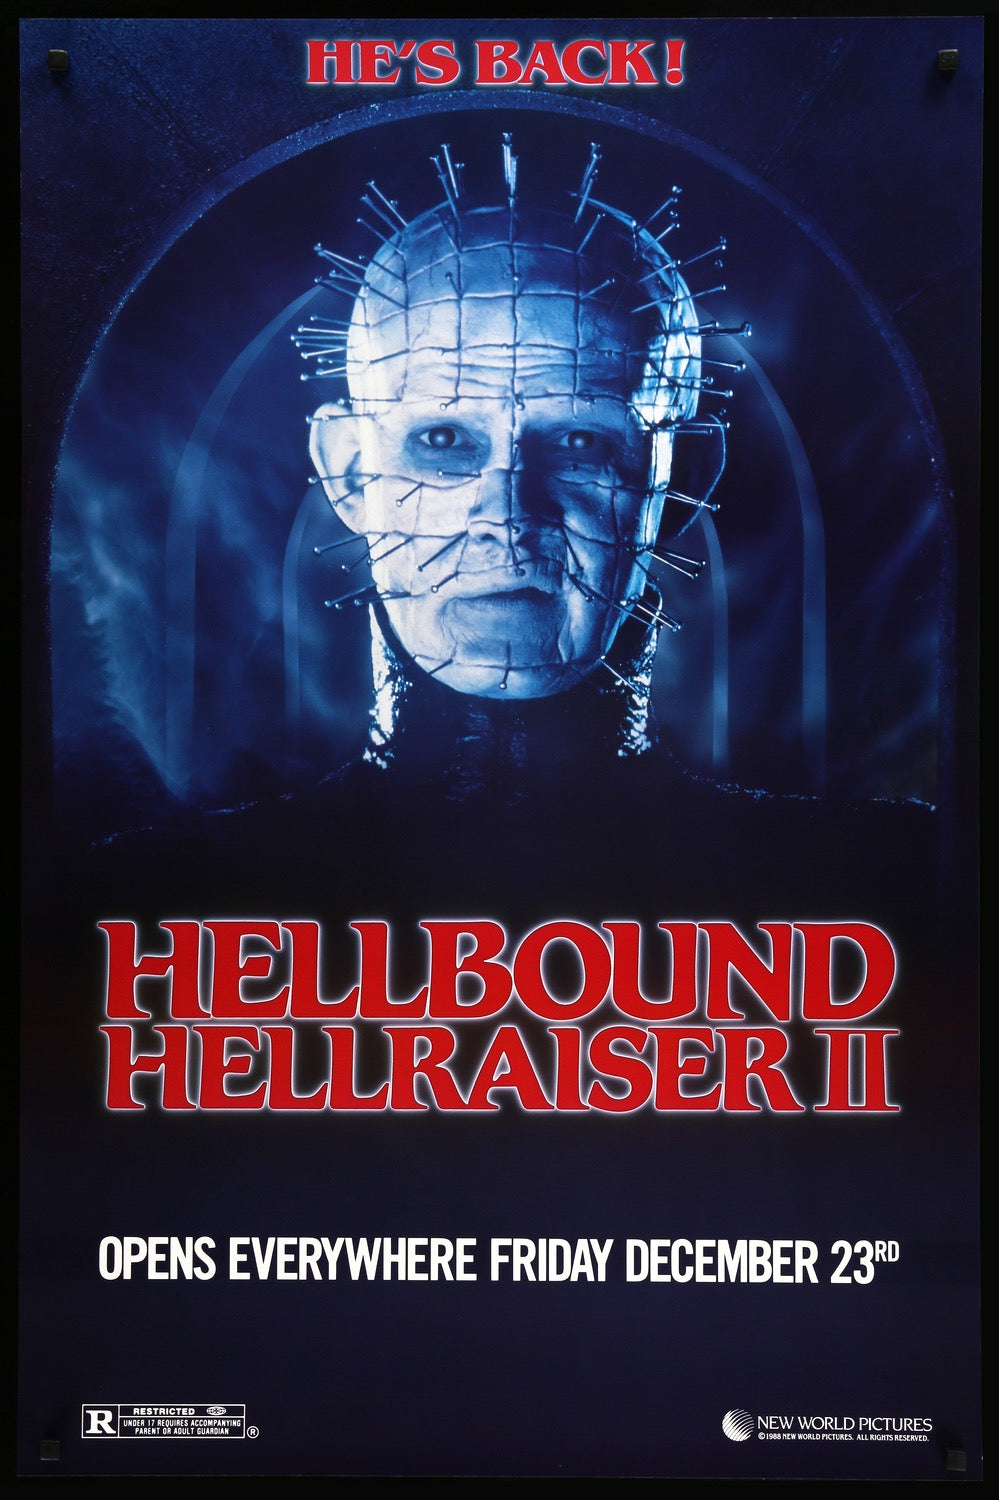 Hellbound - Hellraiser II (1988) original movie poster for sale at Original Film Art